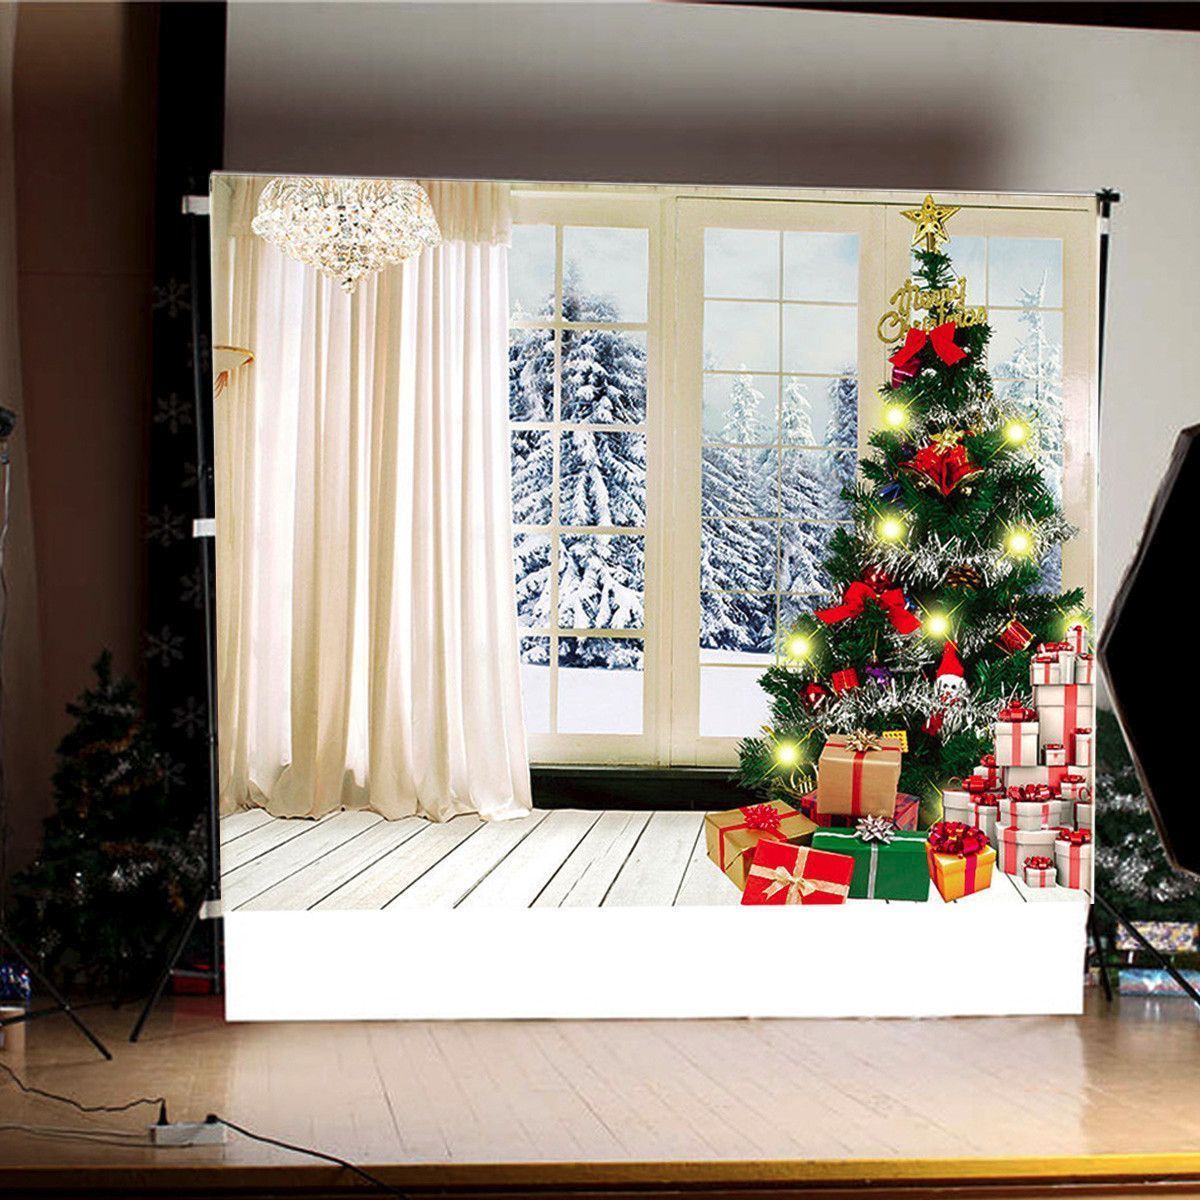 7X5FT-Indoor-White-Christmas-Theme-Studio-Photography-Background-Photographic-Backdrop-1237864